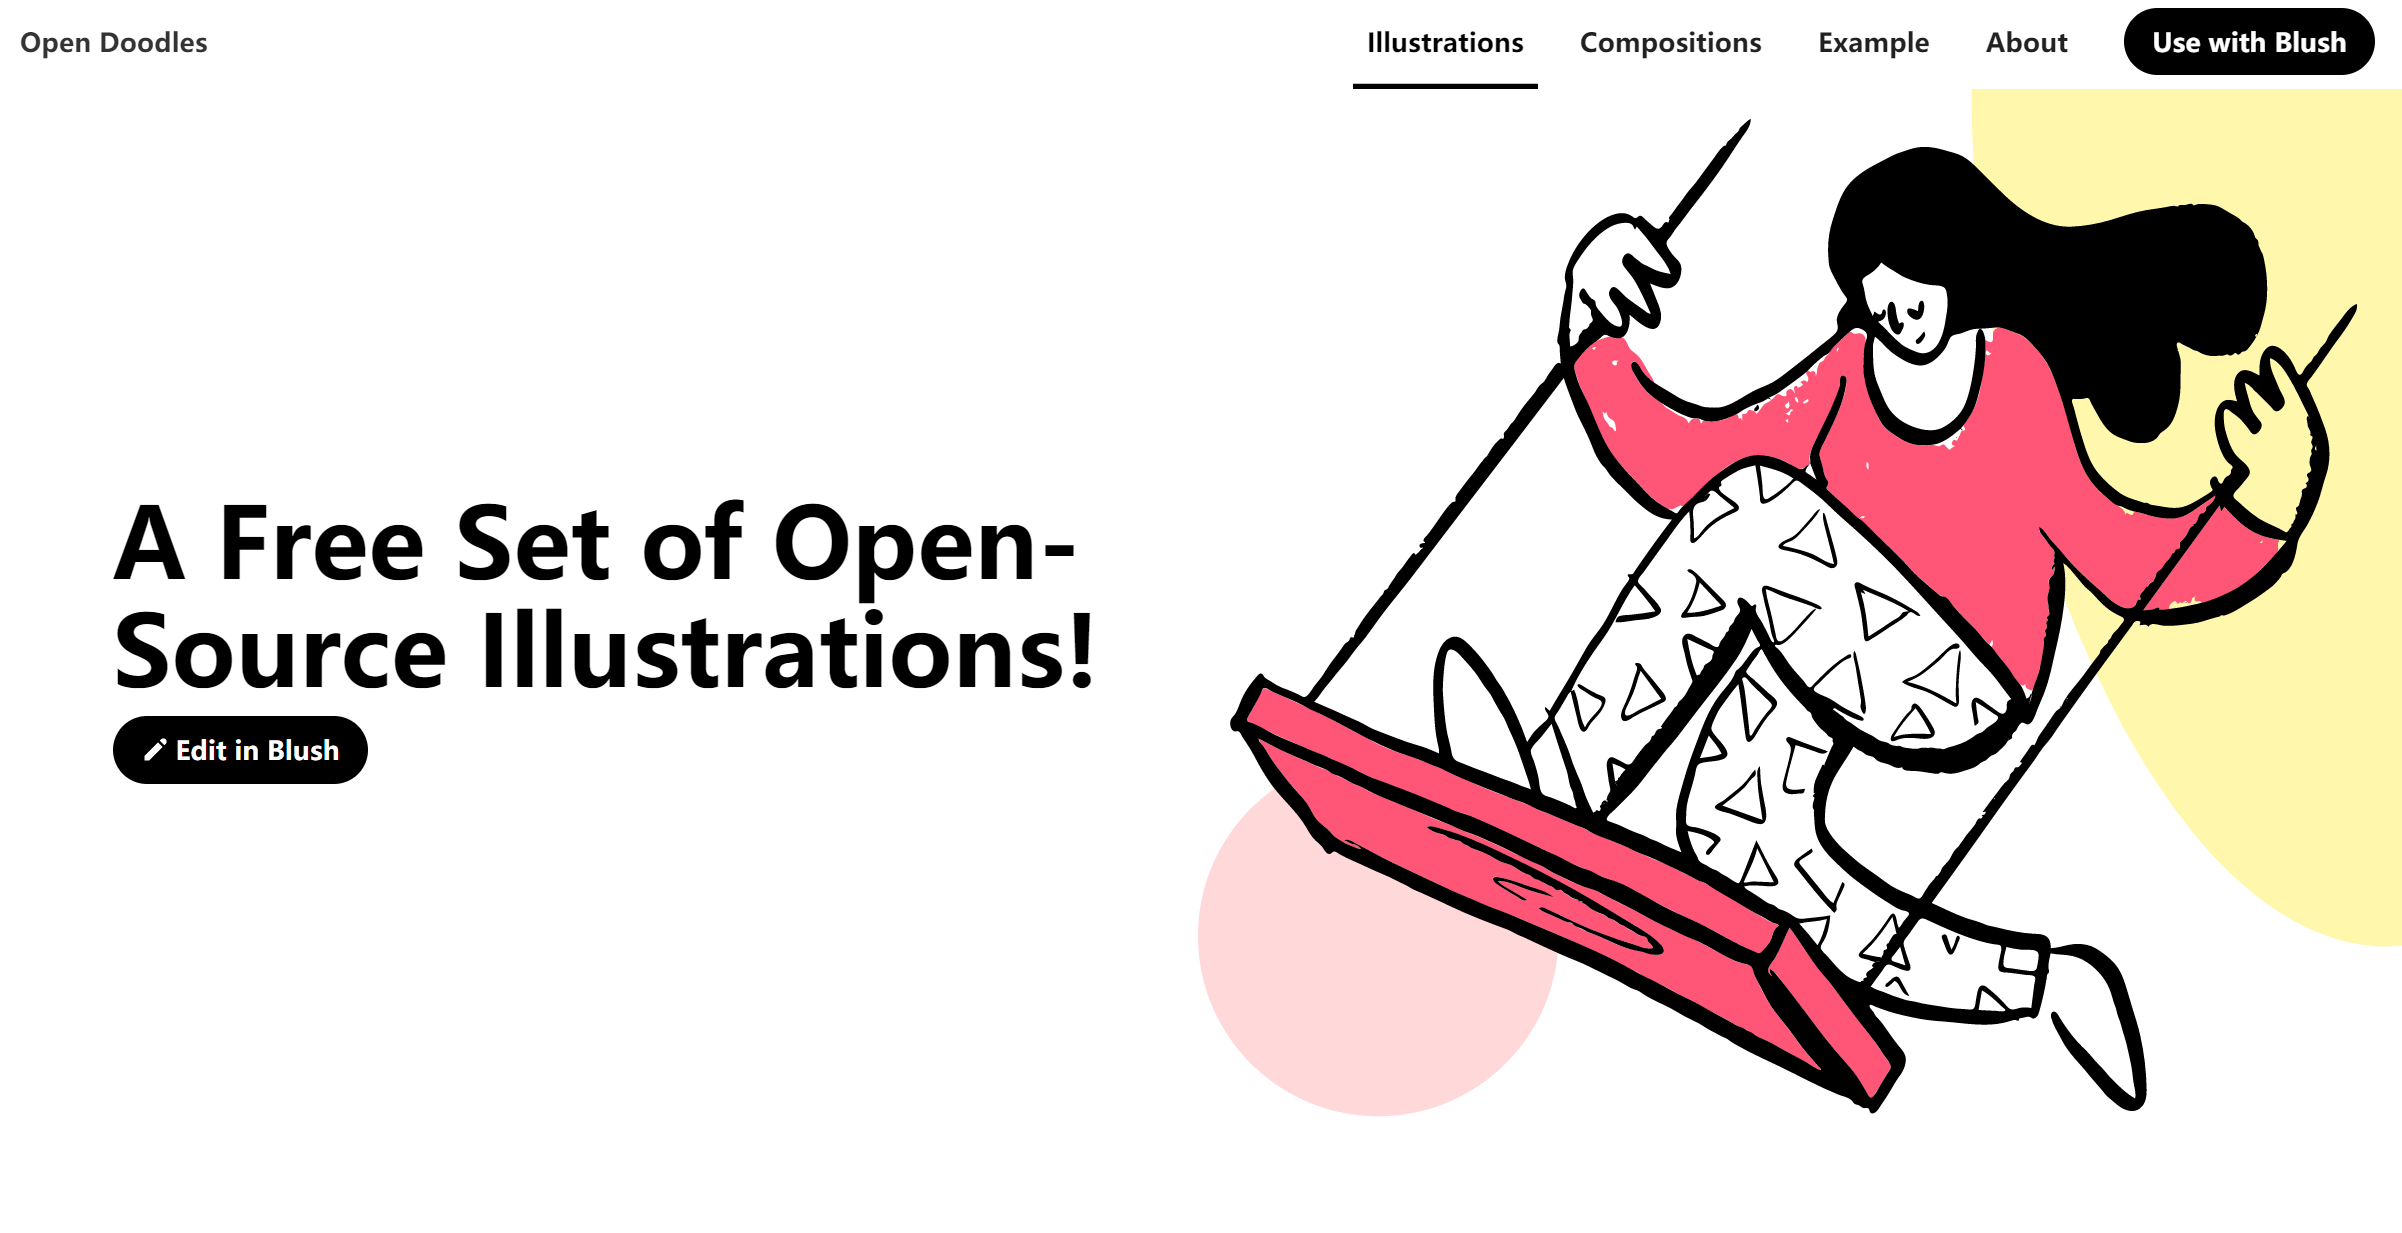 人物素材网站Open Doodles